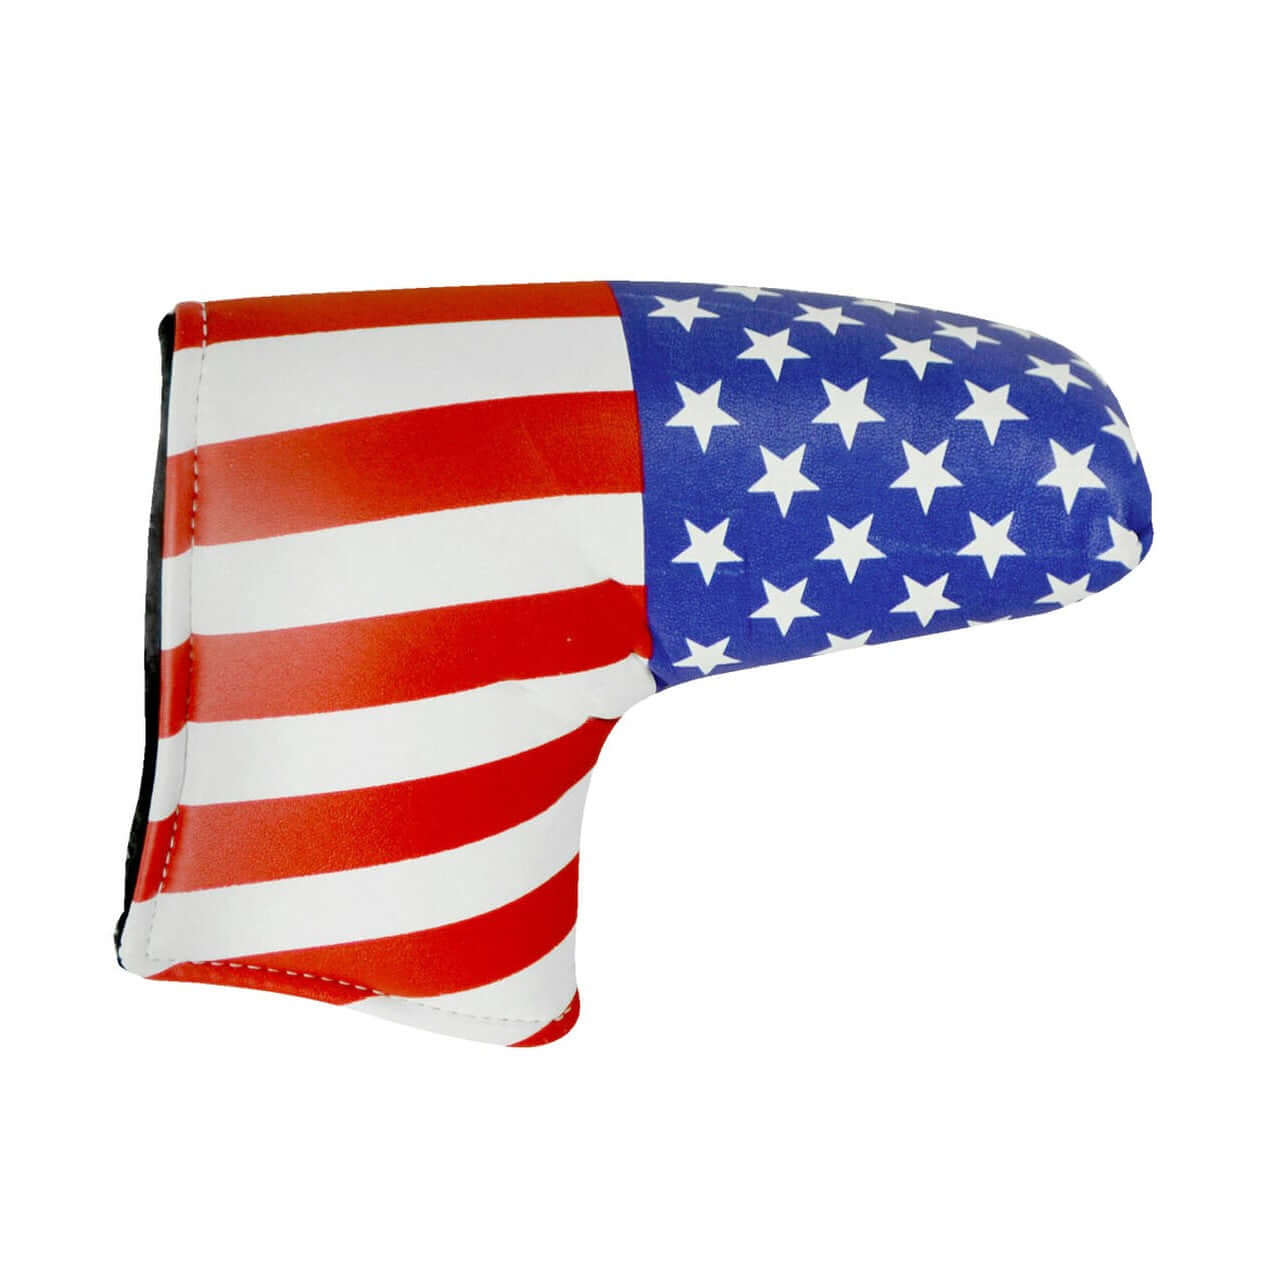 Hot-Z Golf USA Blade Putter Cover - the flag shirt